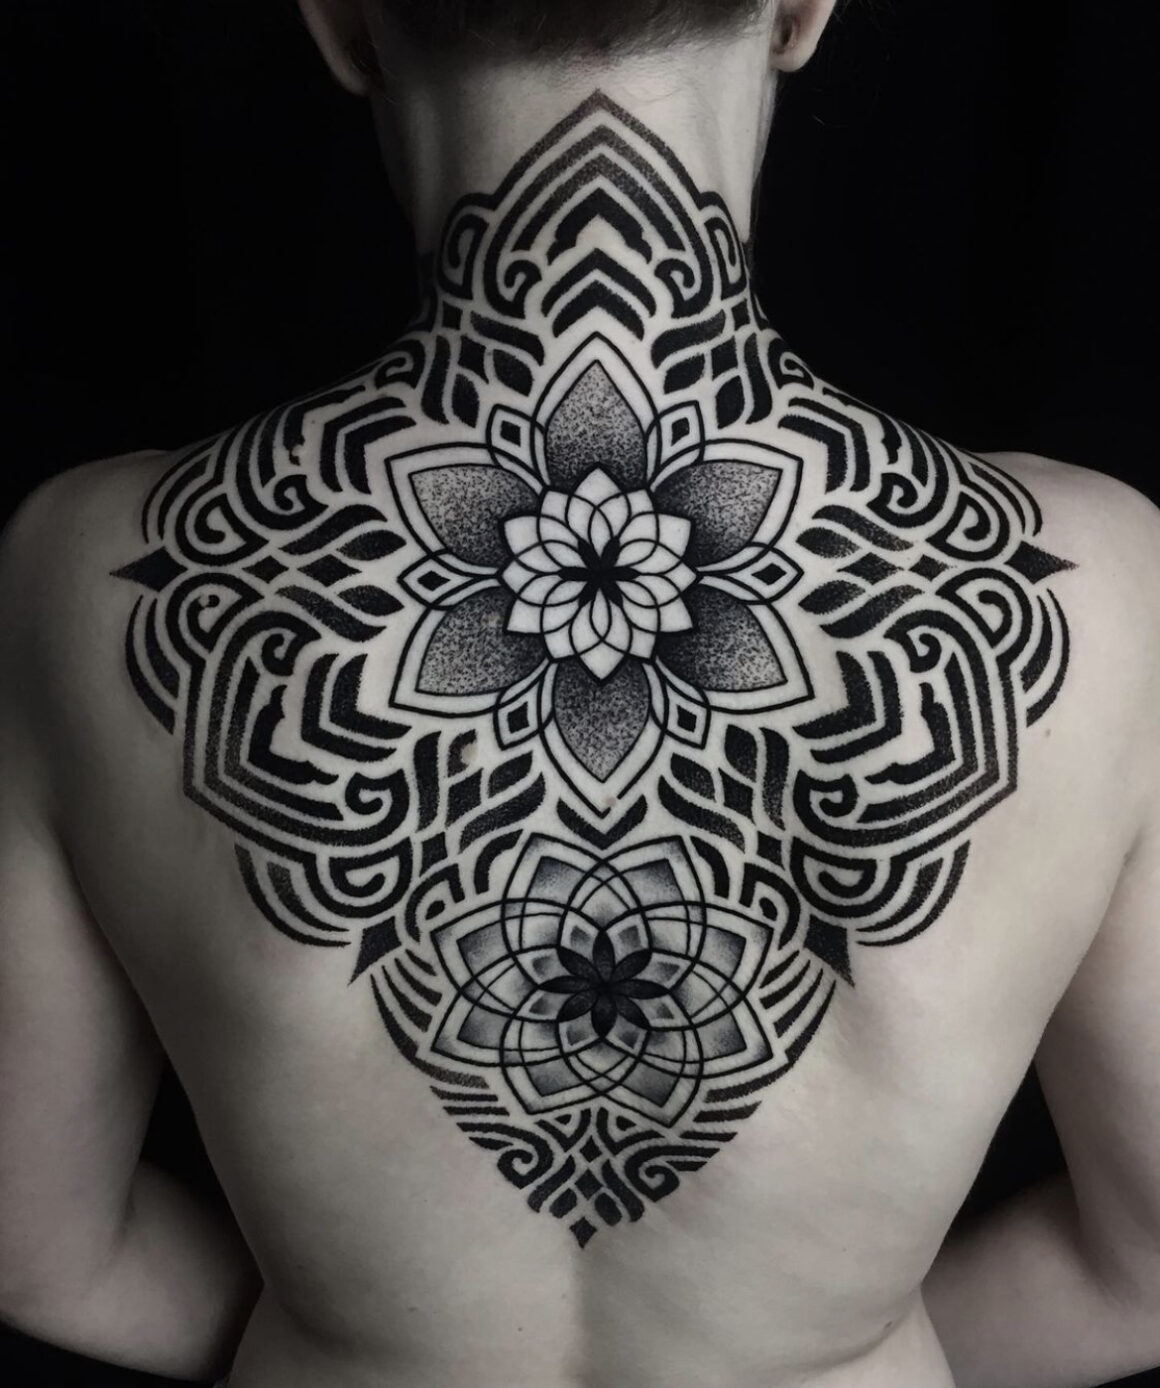 Dark Arts Tattoo Studio darkartstattoomd  Instagram photos and videos